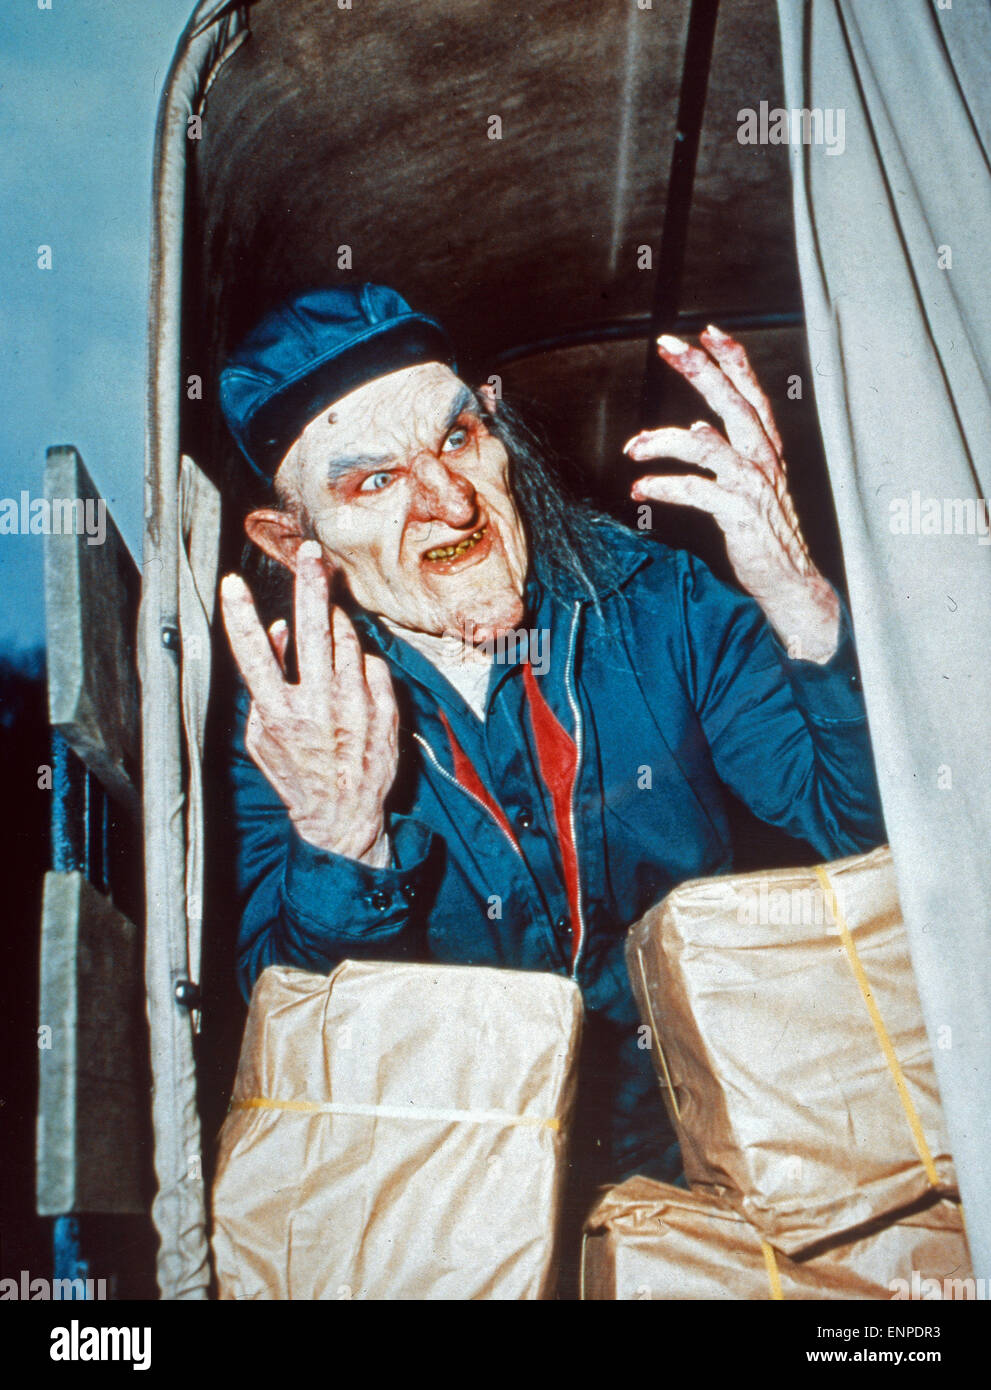 Creepshow 2, alias: Creepshow 2 - Kleine Horrorgeschichten, USA 1987, Regie: Michael Gornick, Szenenfoto Foto de stock